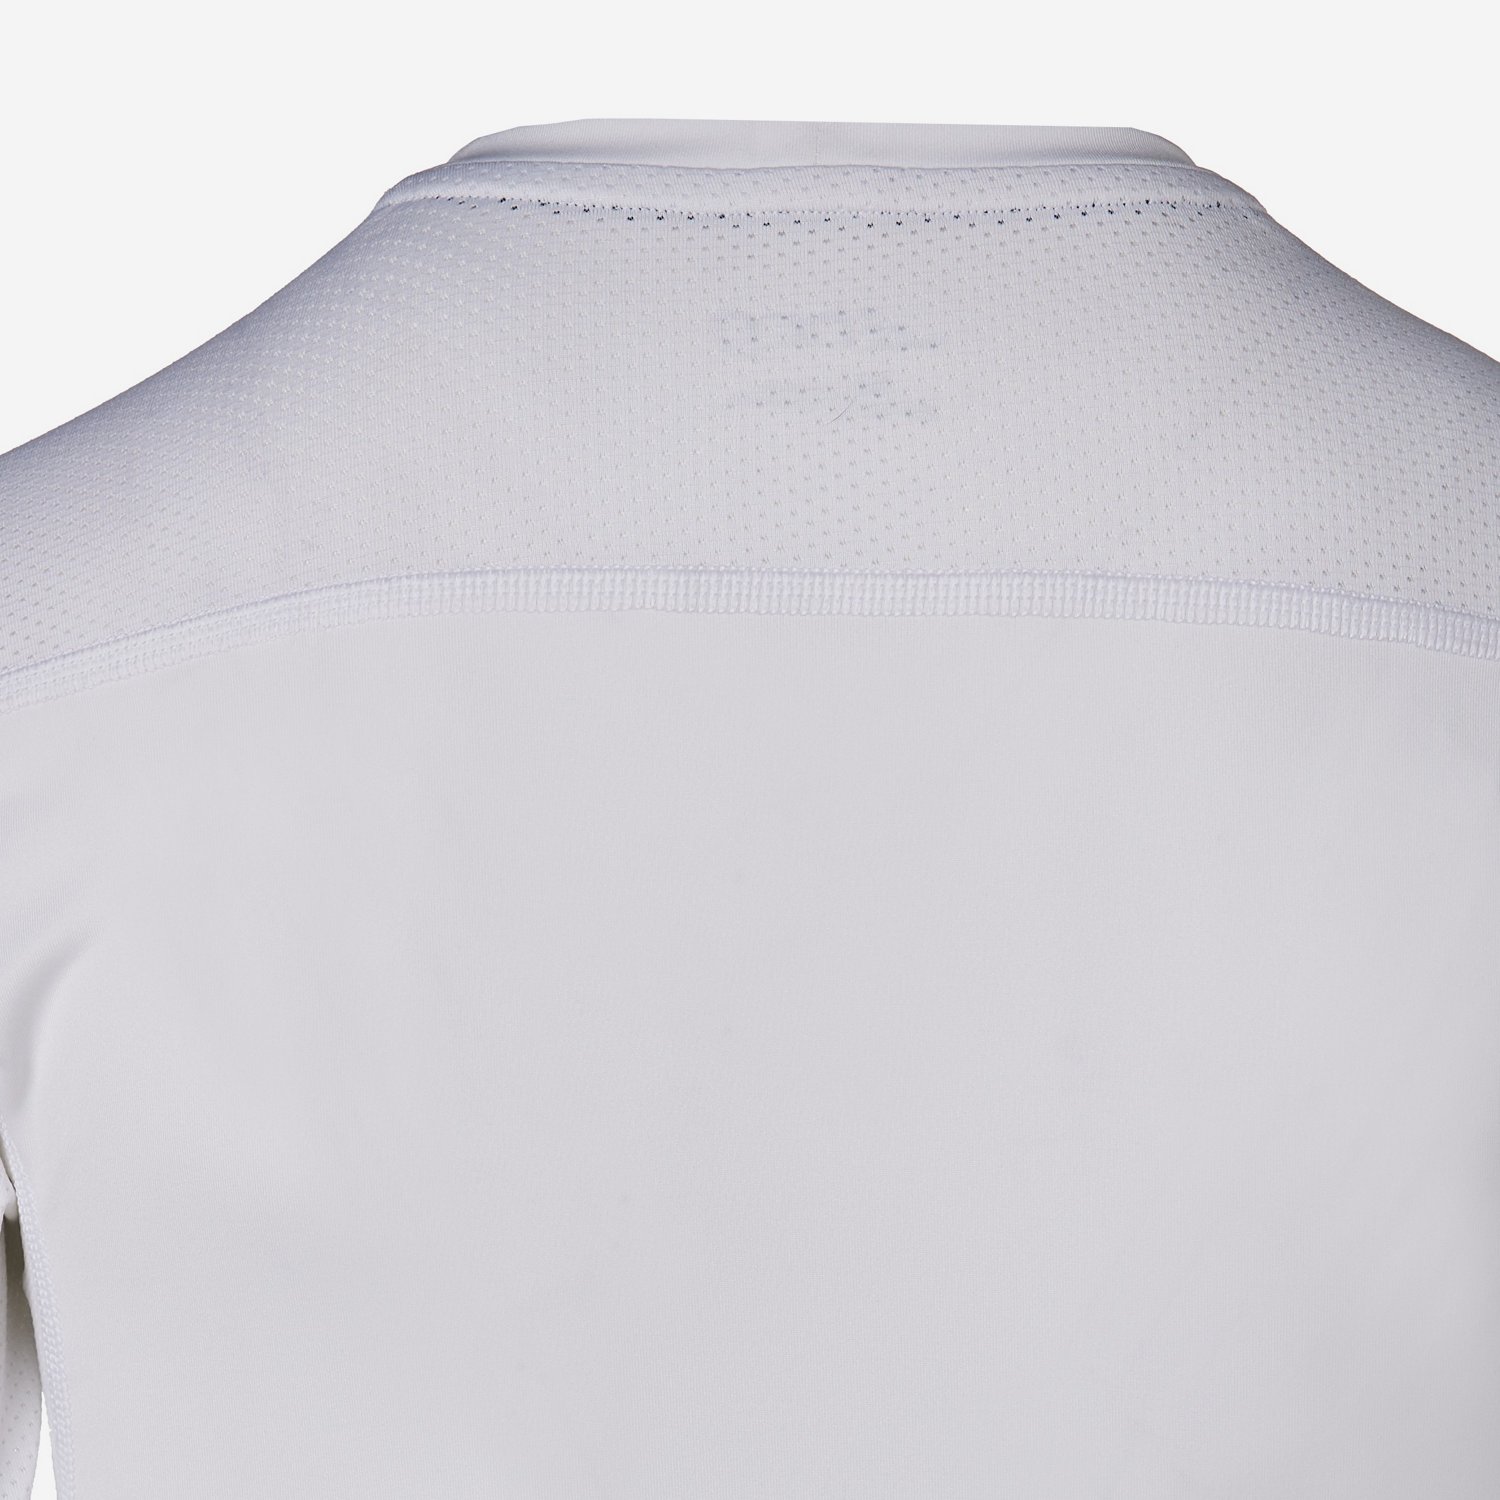 BCG Men's Sport Compression Baselayer Long Sleeve Top